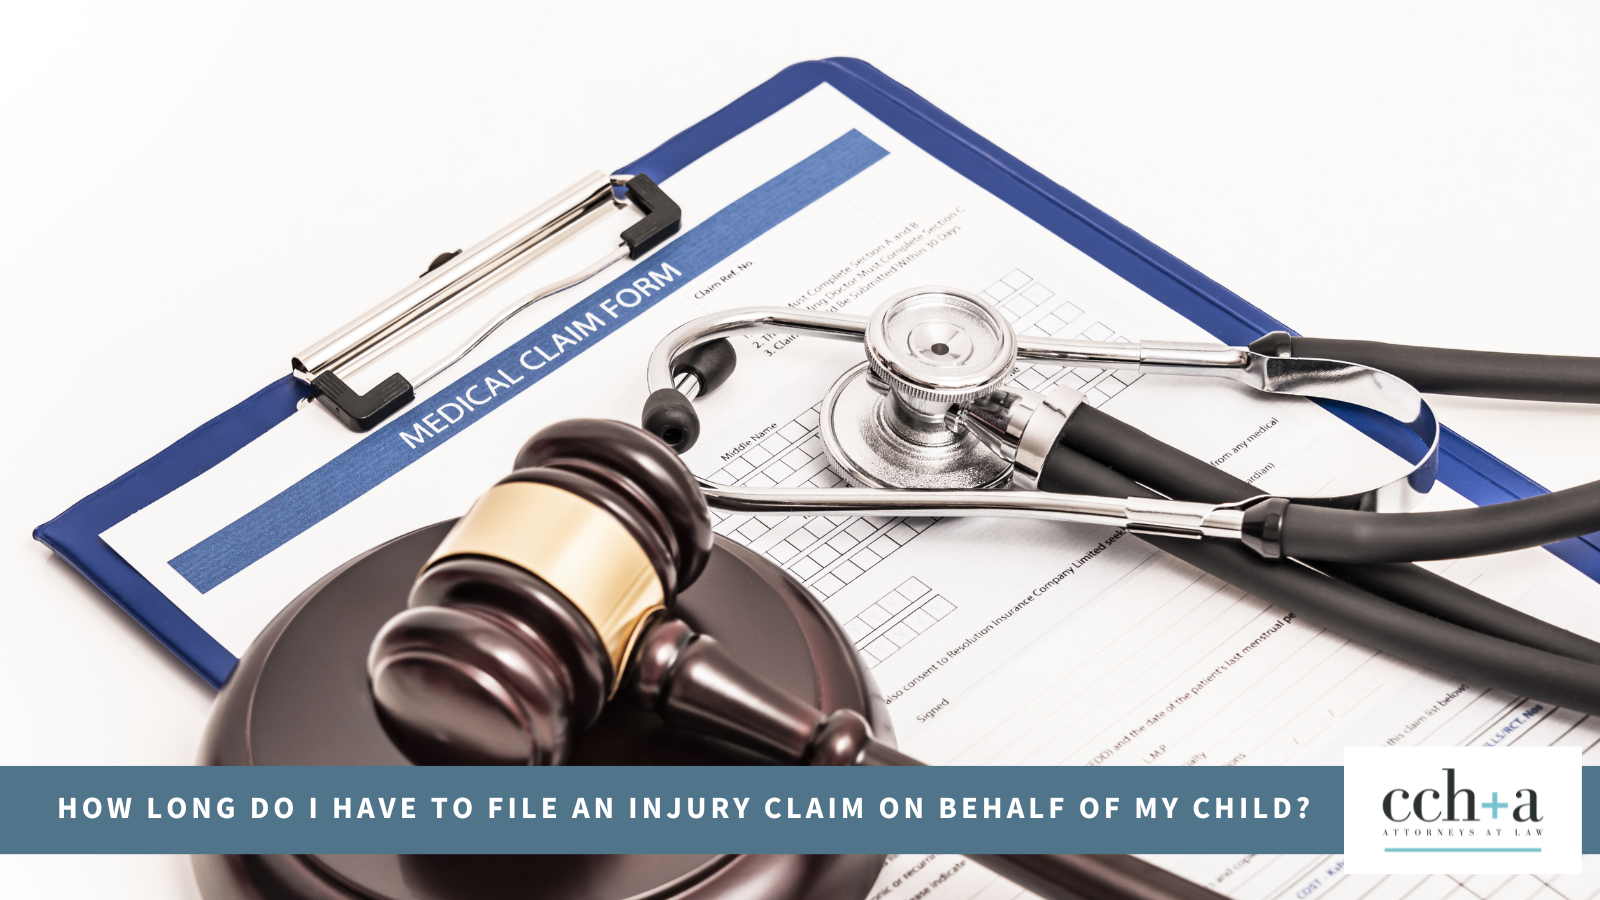 Medical claim form and gavel